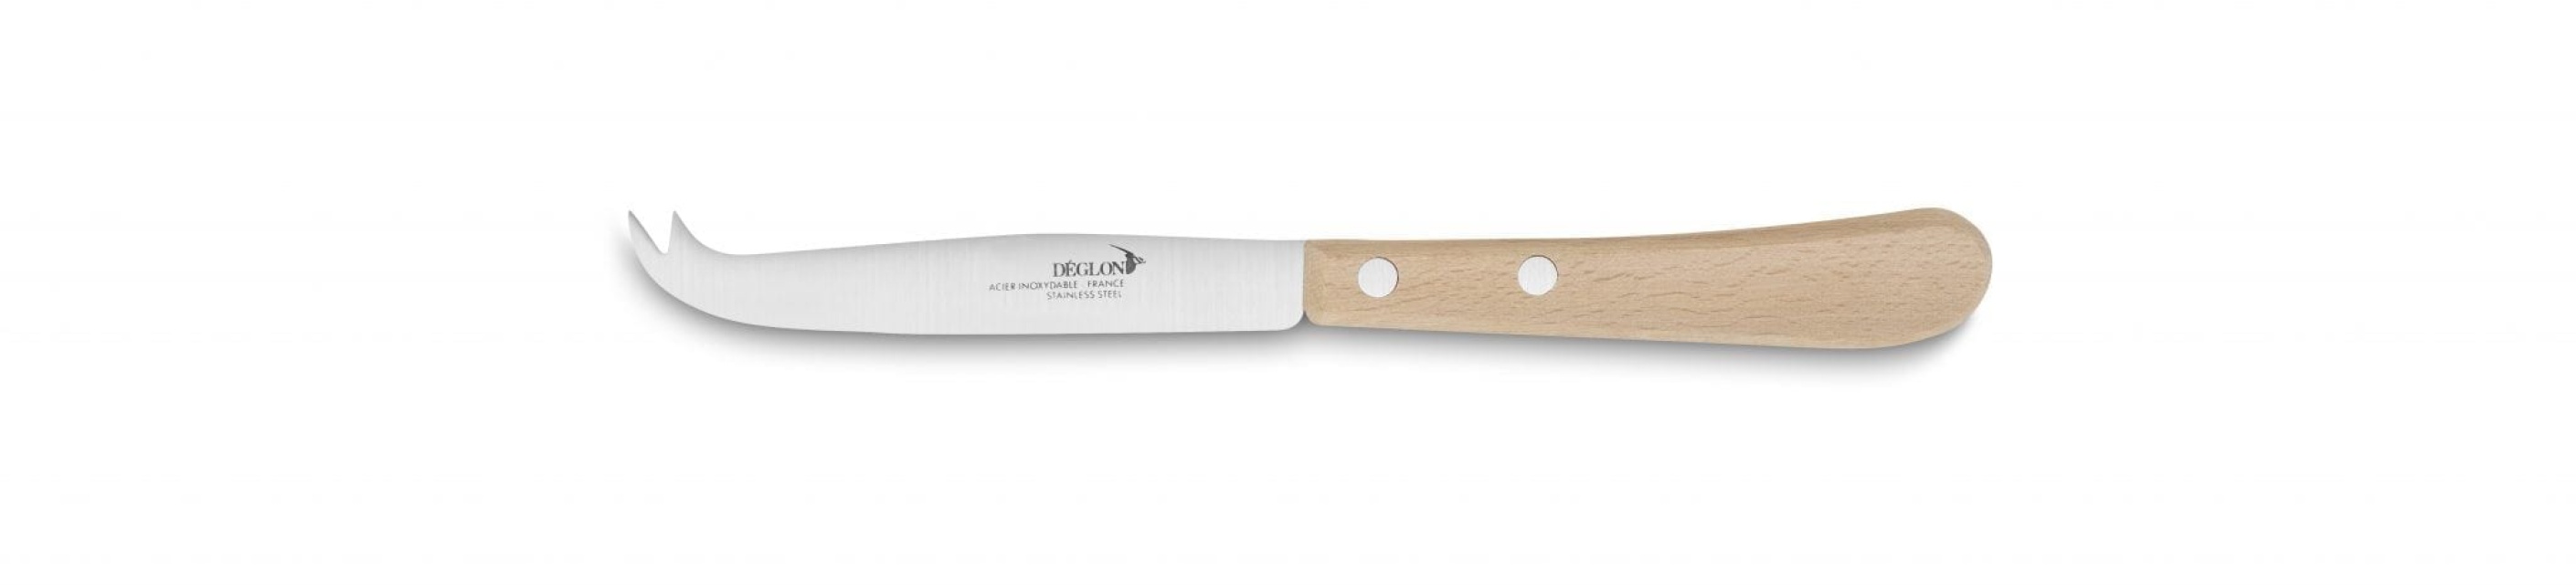 Cheese knife, 11 cm - Deglon